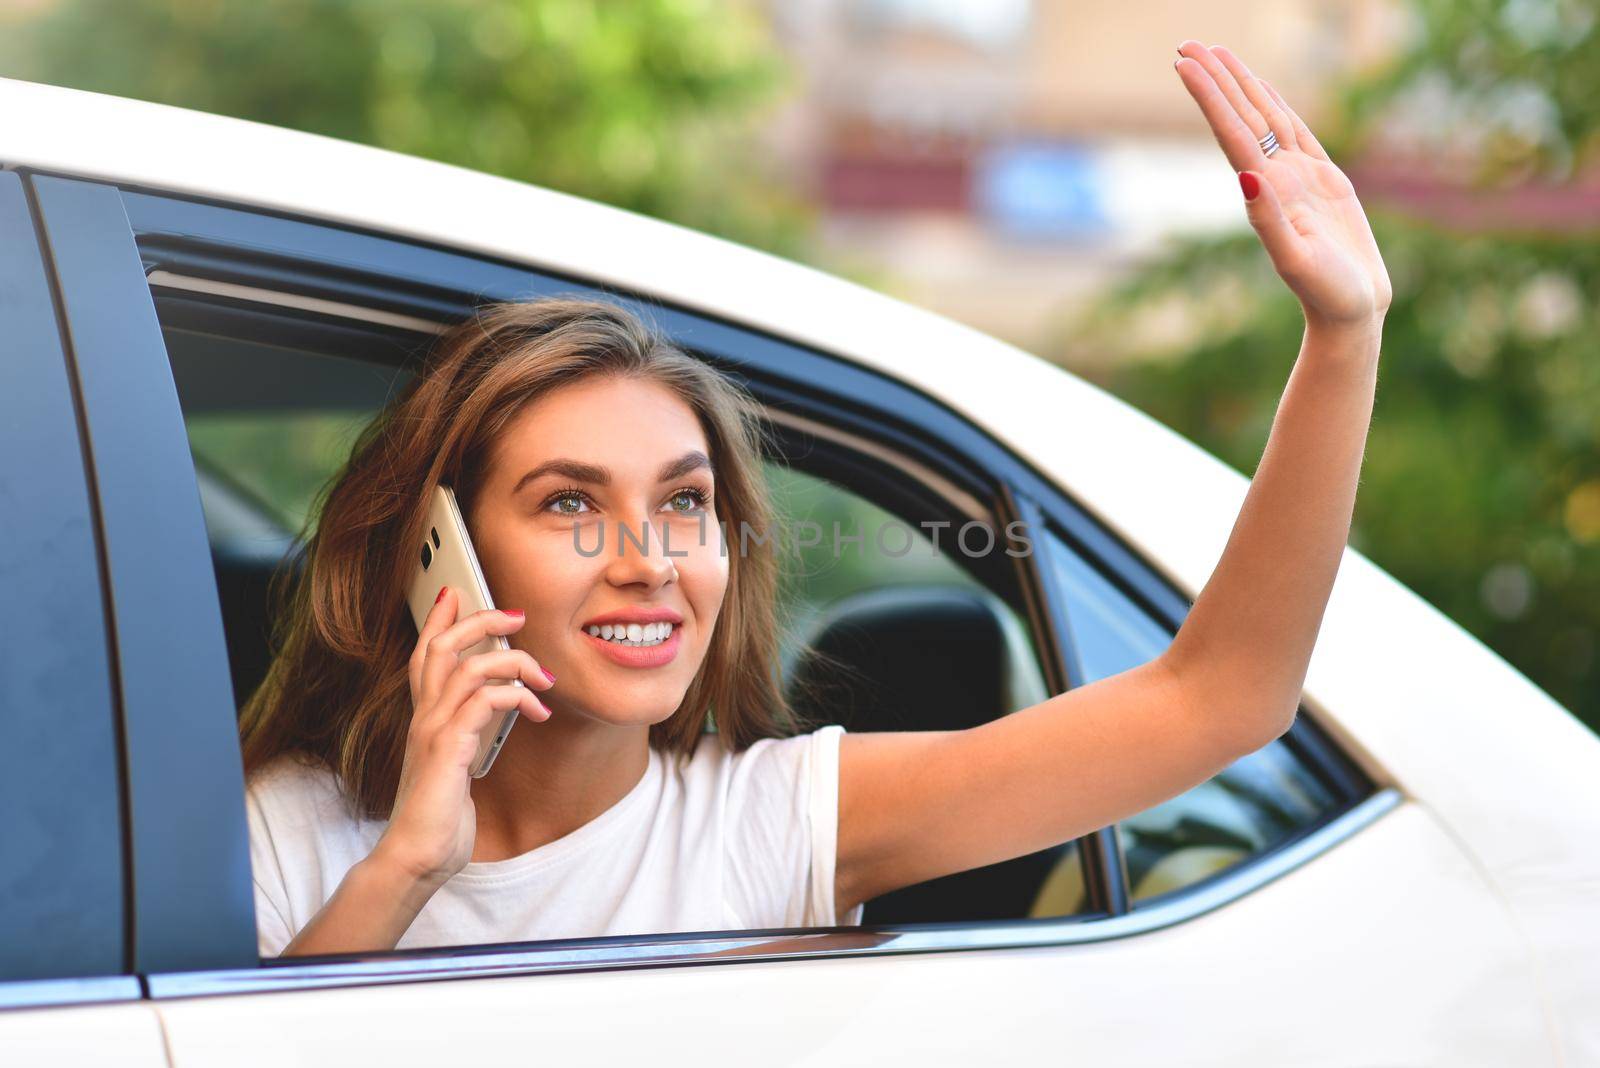 Woman peeking out of car window, woman peeking out of window and waving her hand by Nickstock